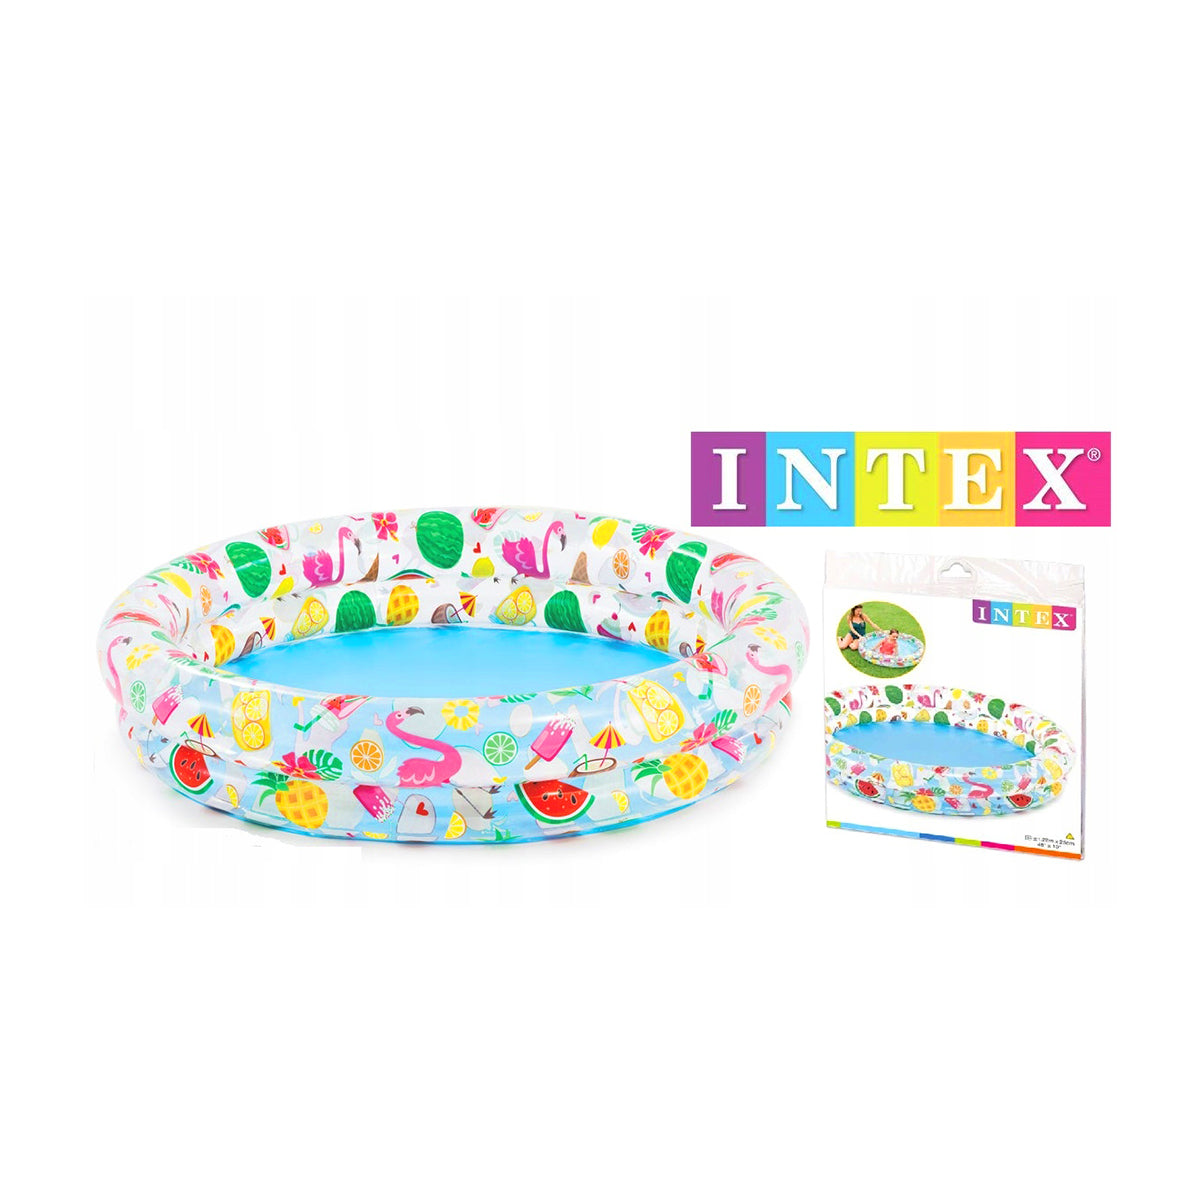 Intex - Fruity 2 Ring Pool